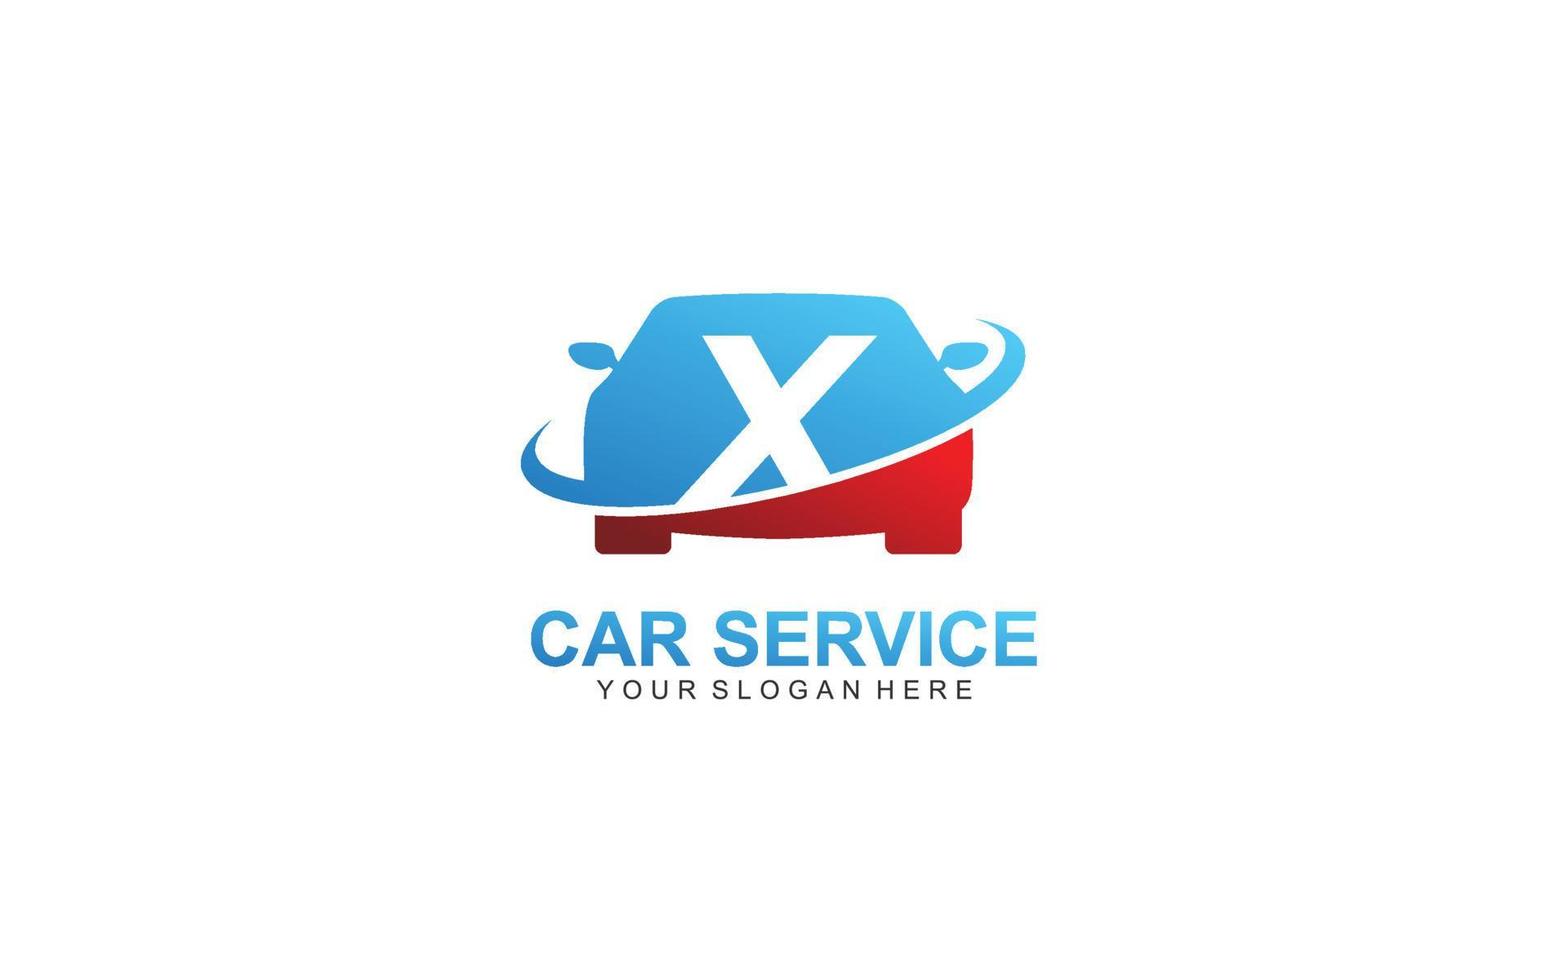 X rent car logo design inspiration. Vector letter template design for brand.